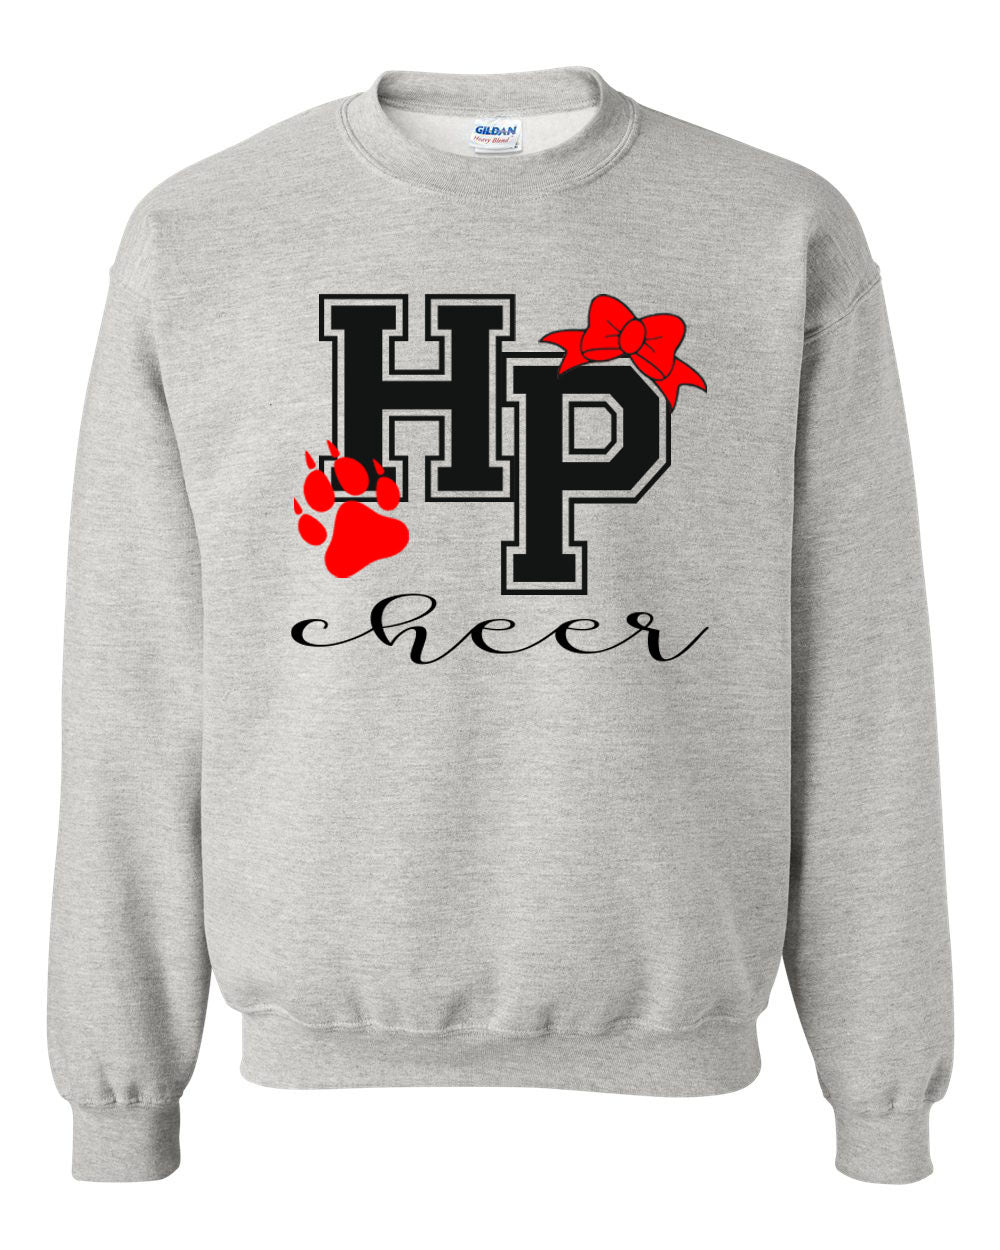 High Point Cheer Design 3 non hooded sweatshirt